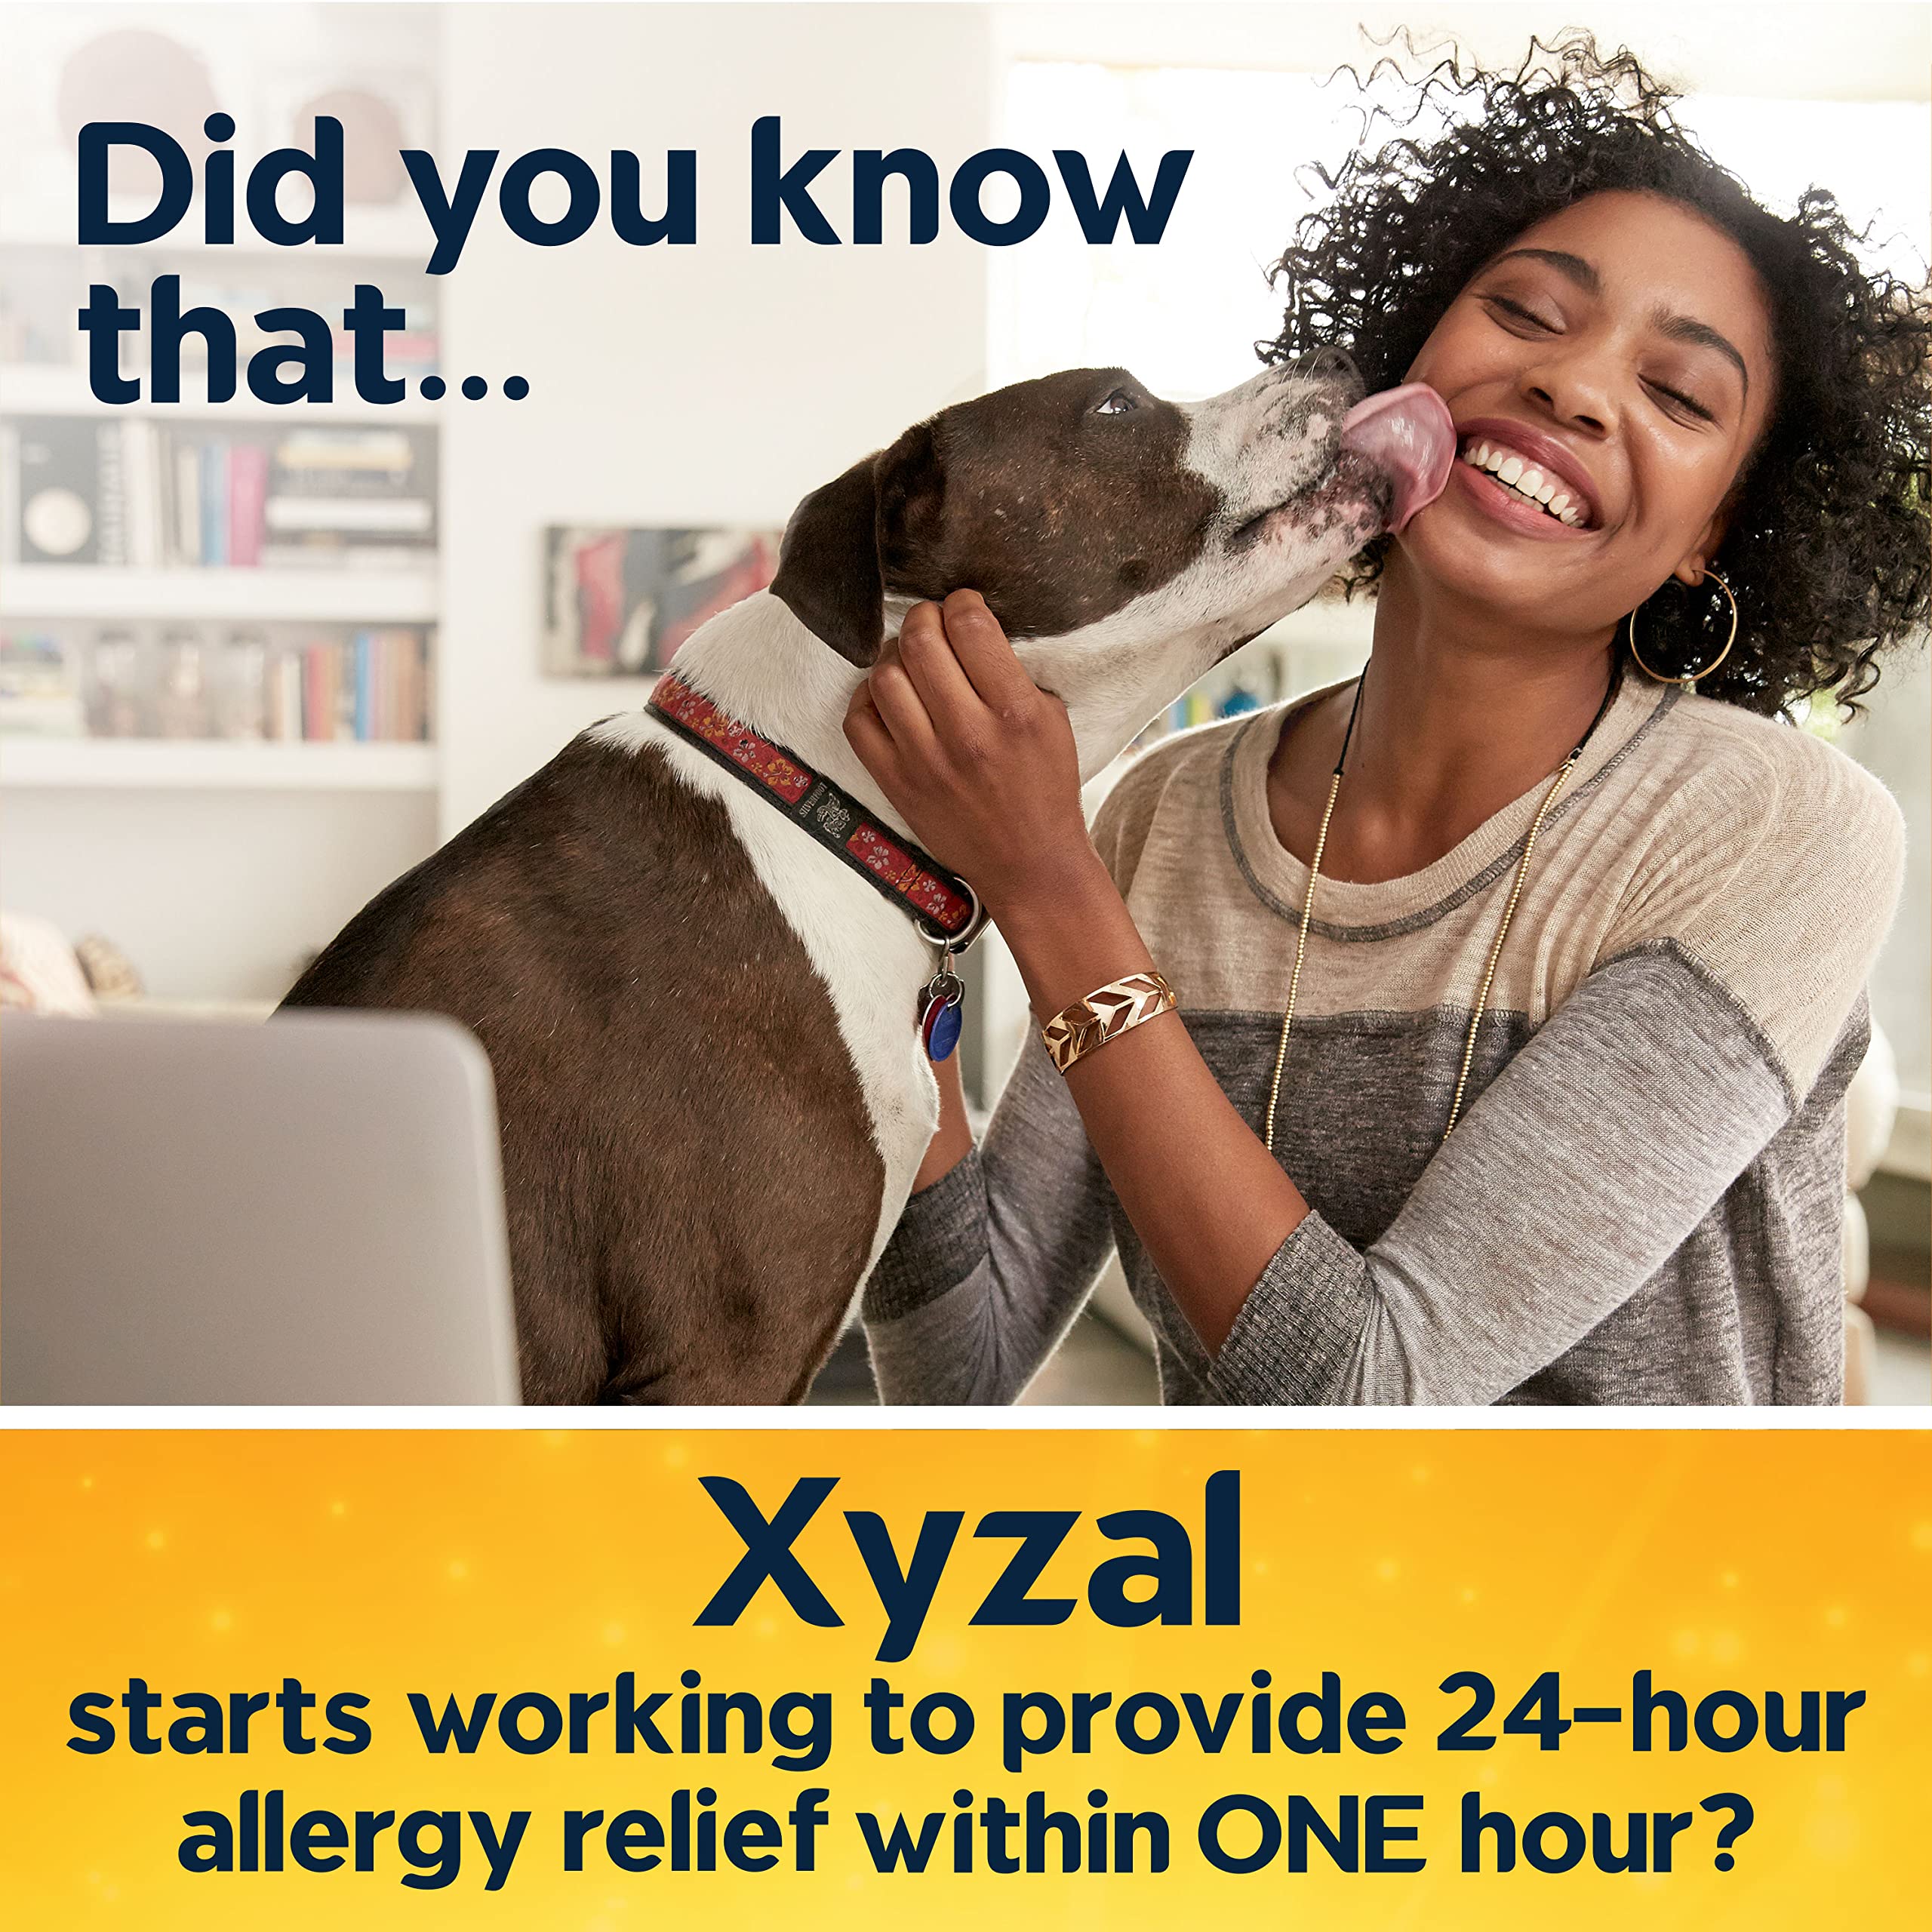 Xyzal Allergy Pills, 24-Hour Allergy Relief, 55-Count, Original Prescription Strength